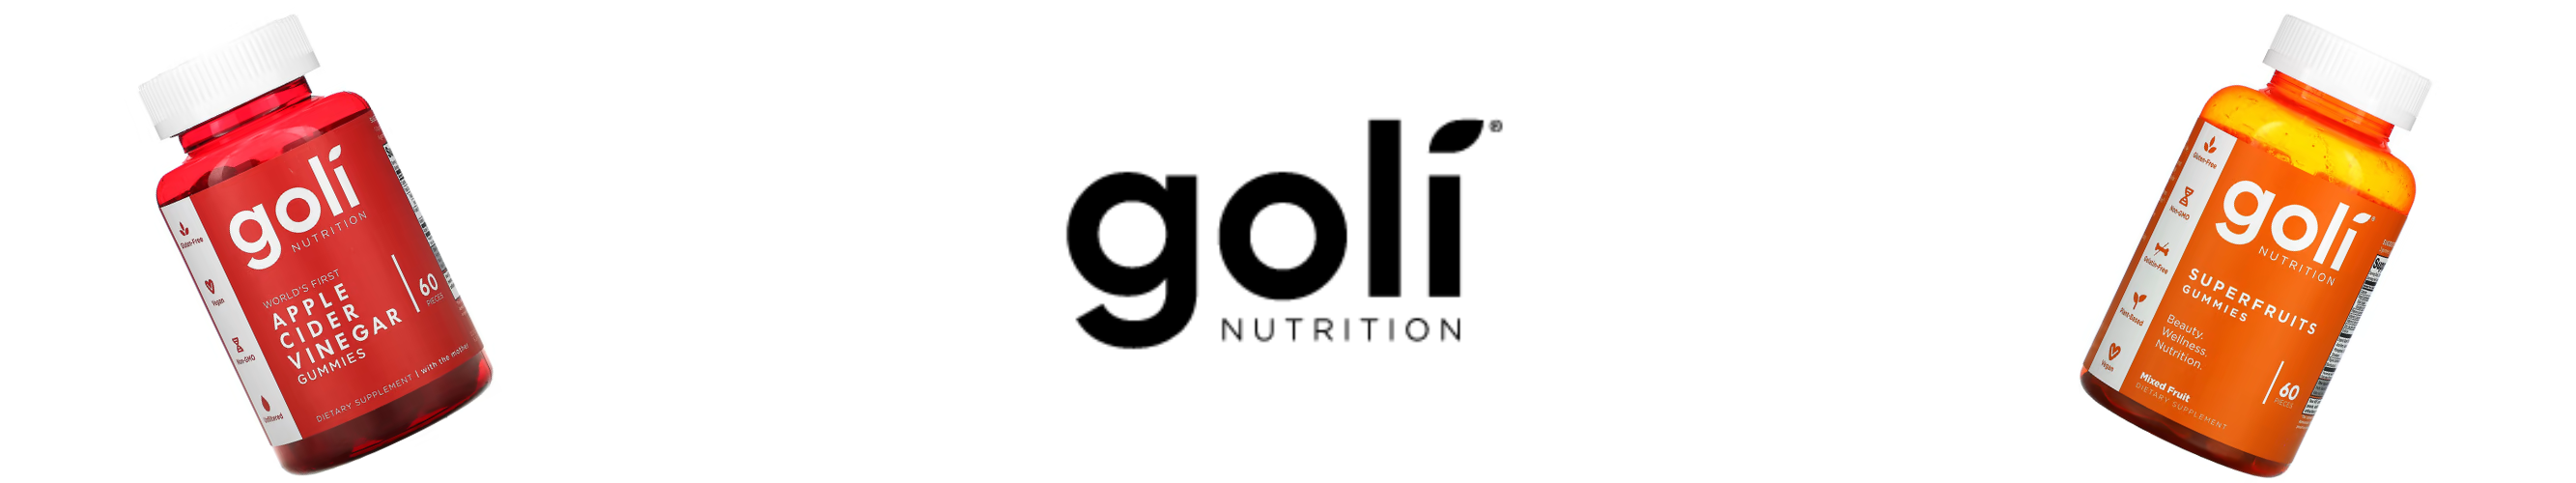 HiLife Vitamins | Goli Nutrition